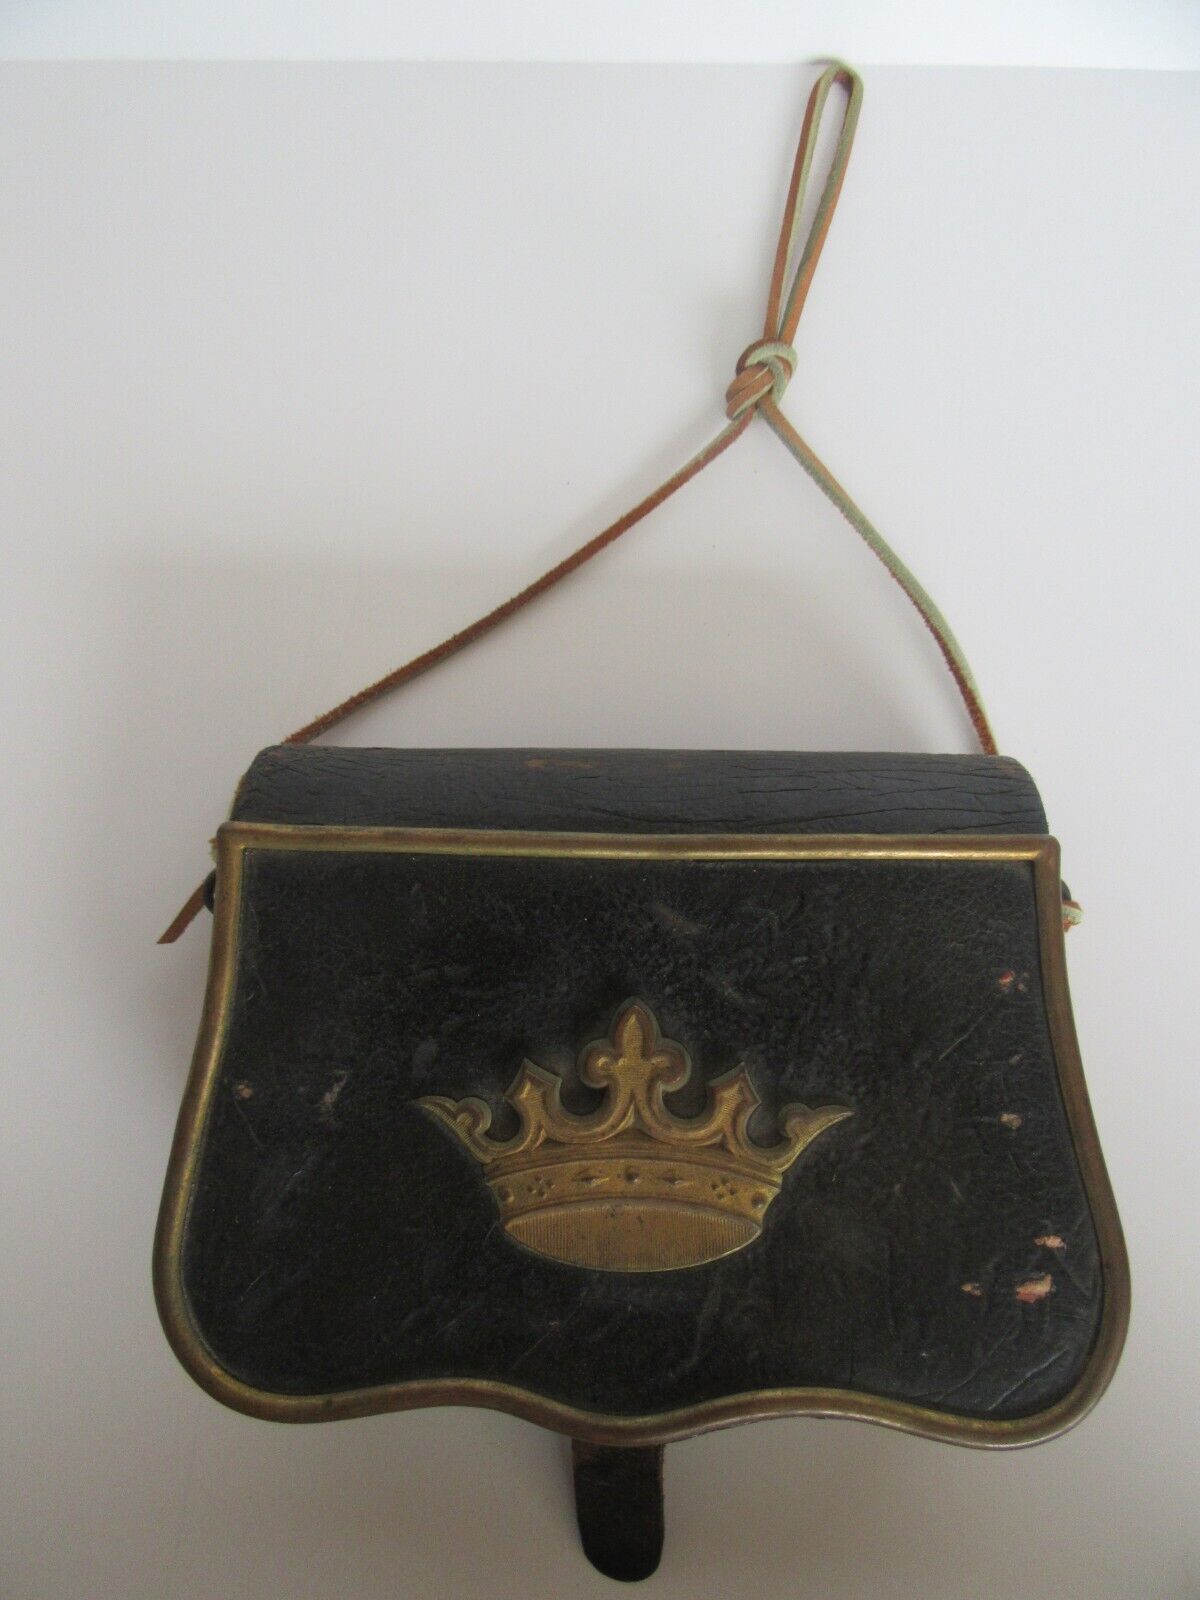 Antique 19th Century French Napoleonic Crown Ammunition Cartridge Box -Excellent